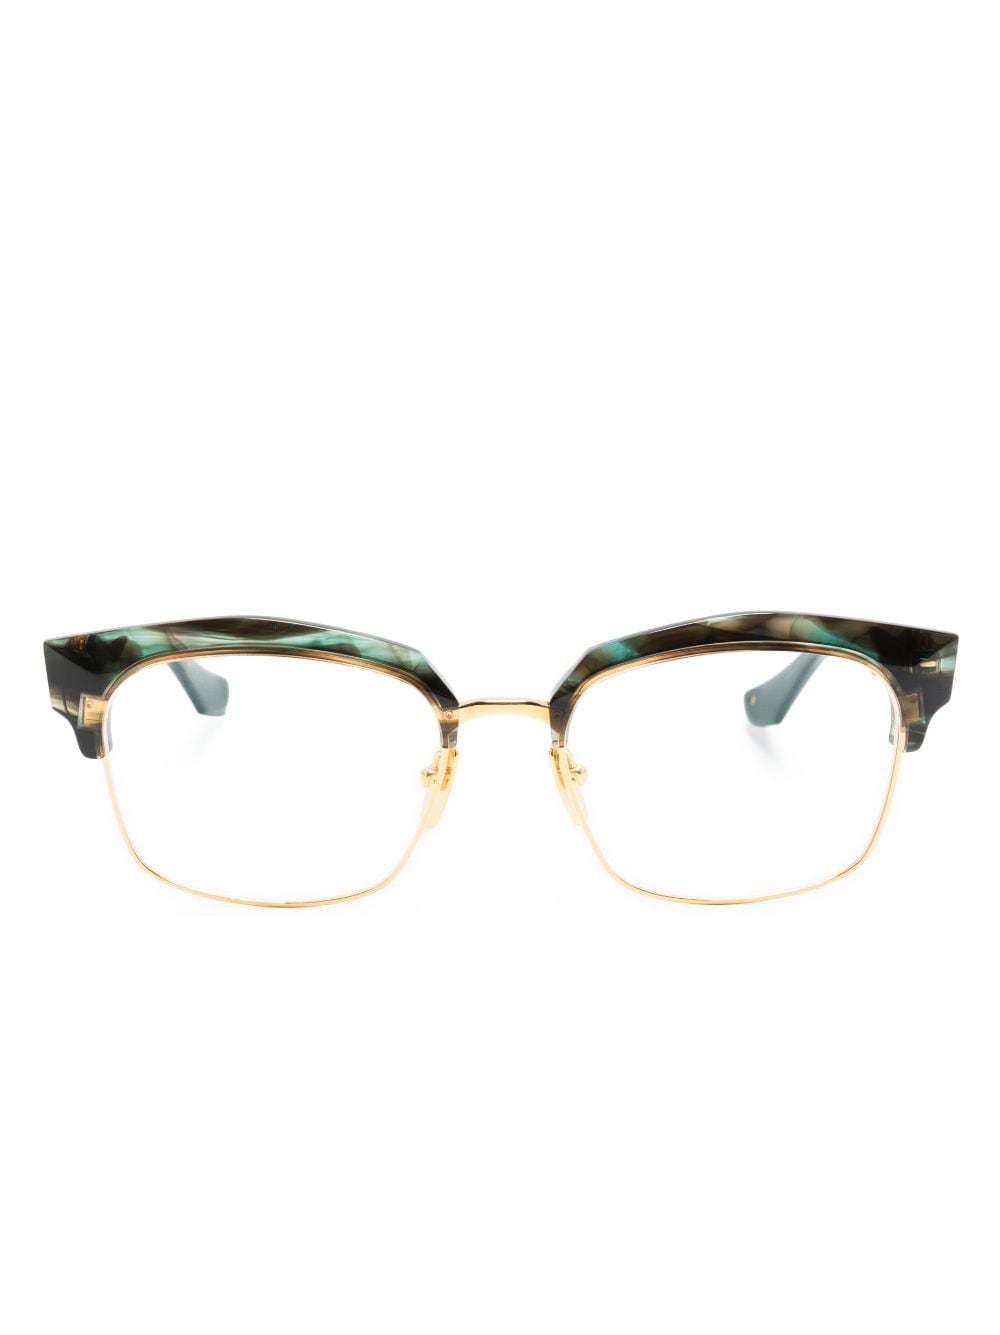 Dita Eyewear Lotova Tortoiseshell cat-eye Glasses - Farfetch